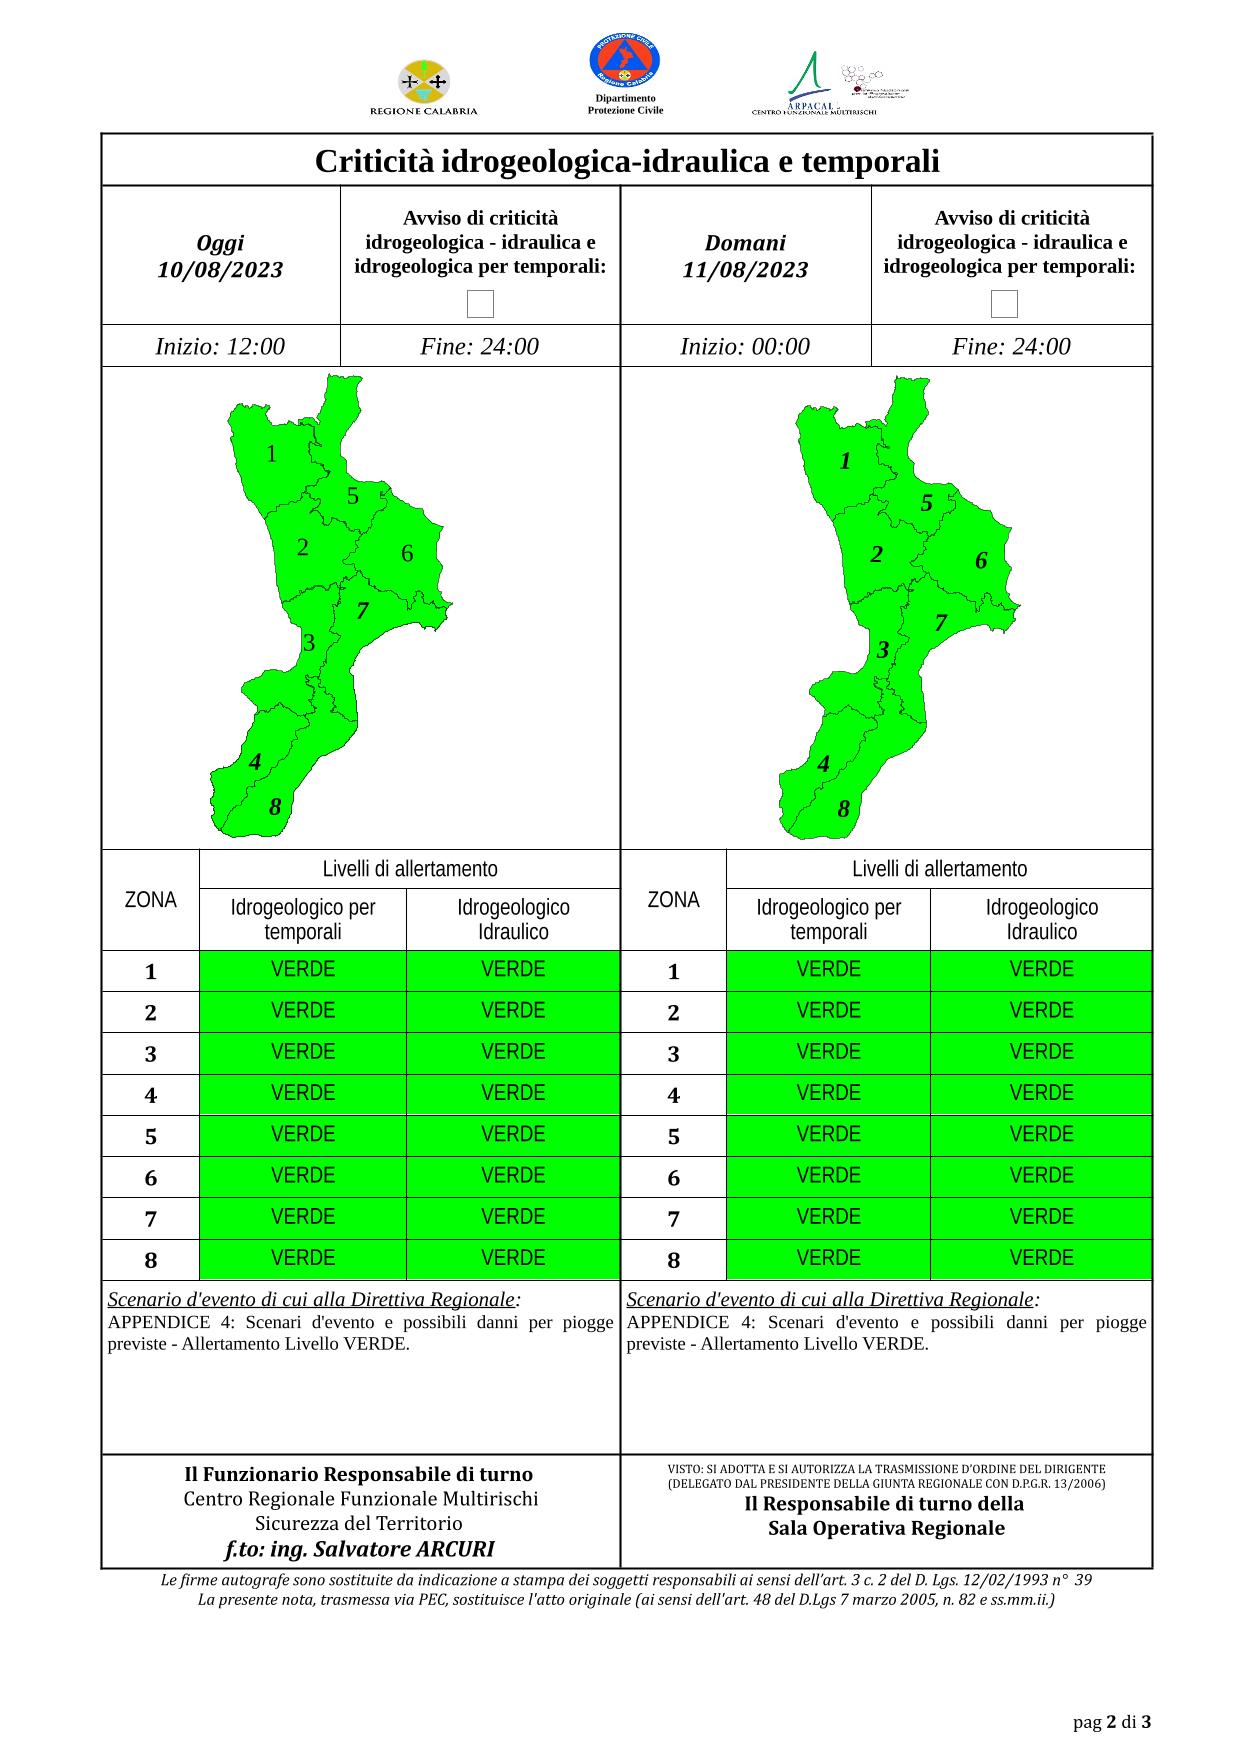 Criticità idrogeologica-idraulica e temporali in Calabria 10-08-2023